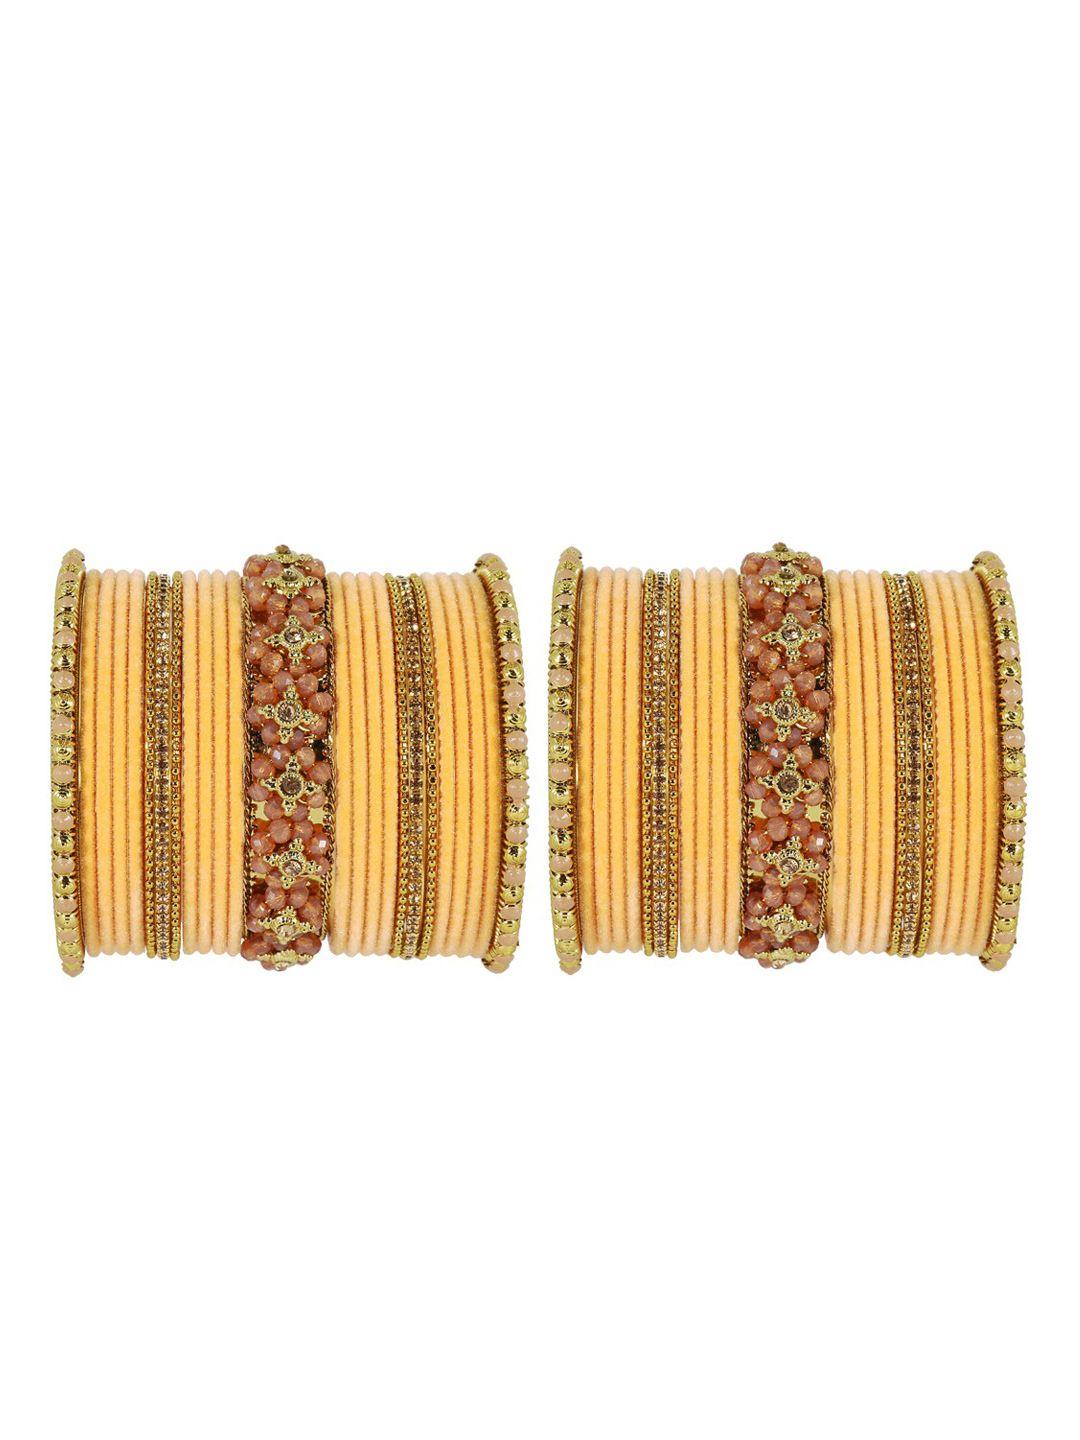 nmii 52 pieces stone-studded bangles